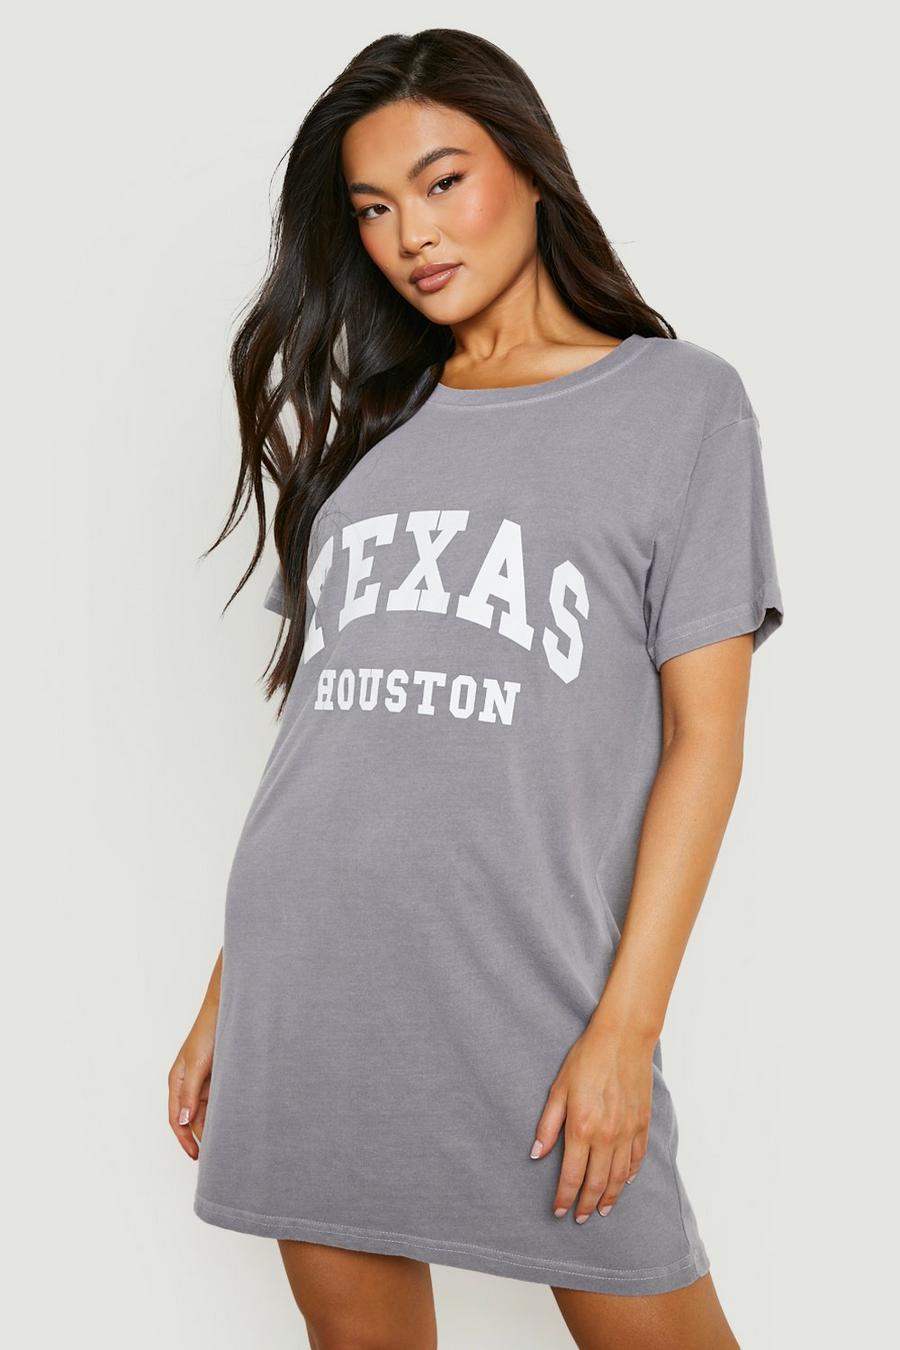 T-Shirt-Kleid mit Texas Houston Print, Grey grau